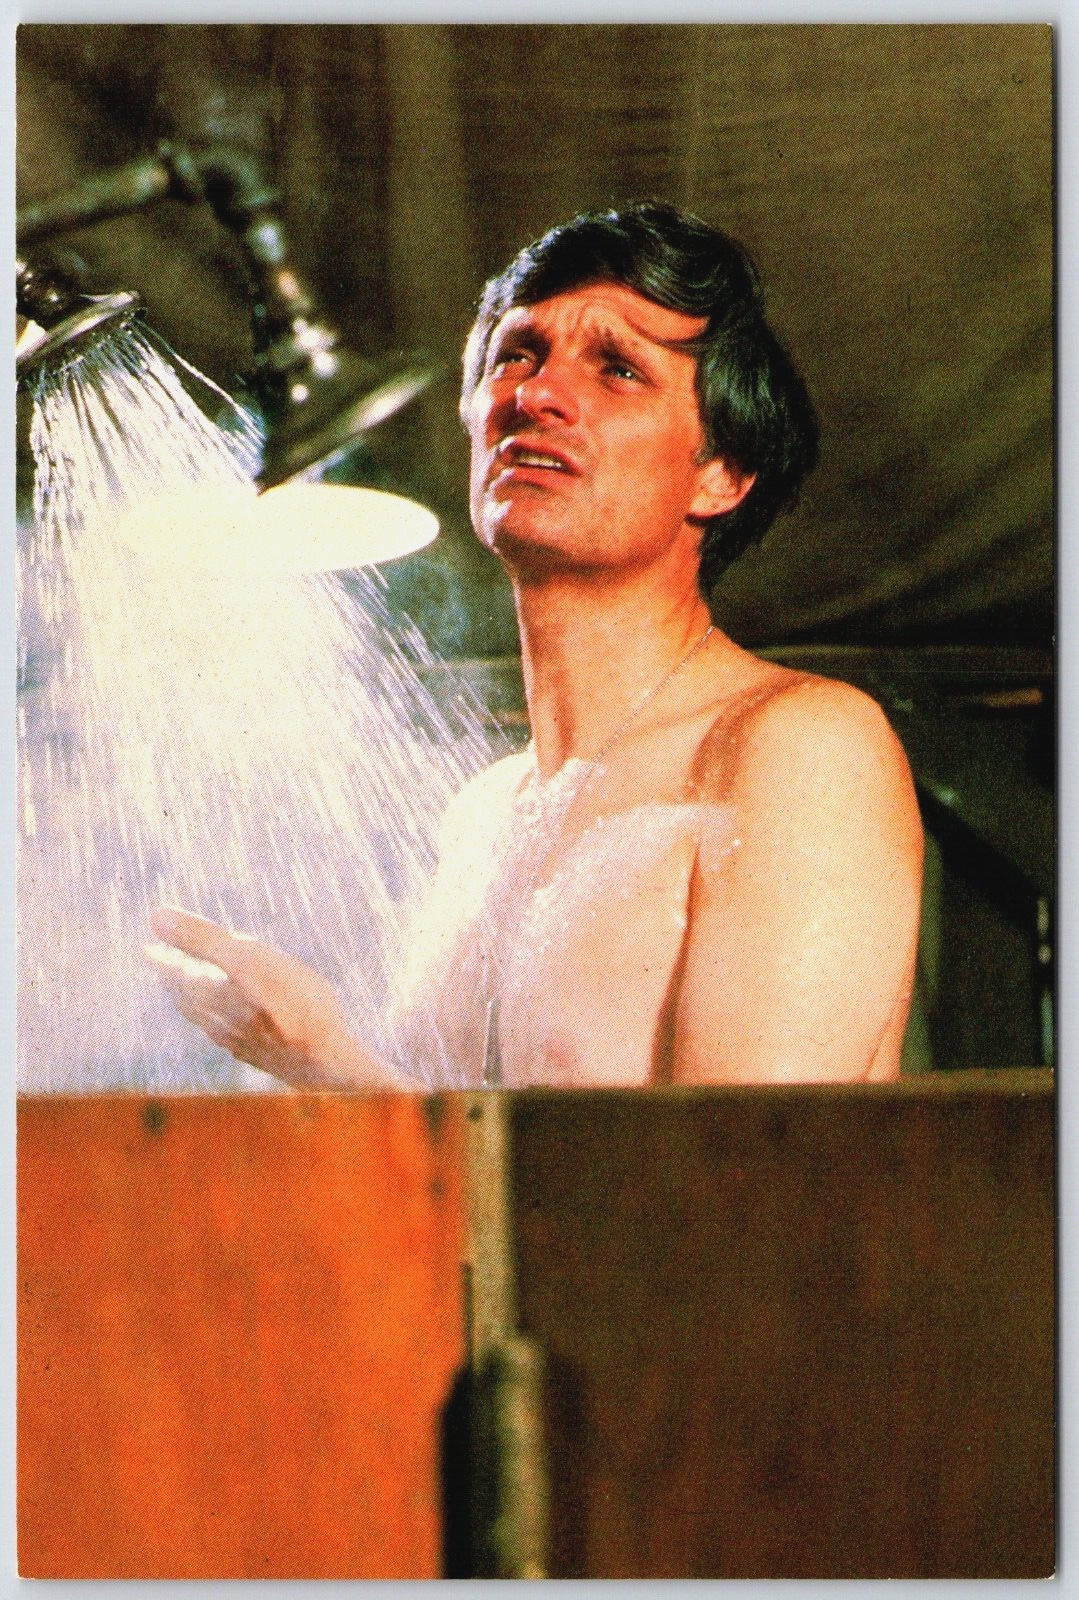 Postcard Benjamin Franklin Pierce Hawkeye Alan Alda MASH M*A*S*H  c1982 Shower